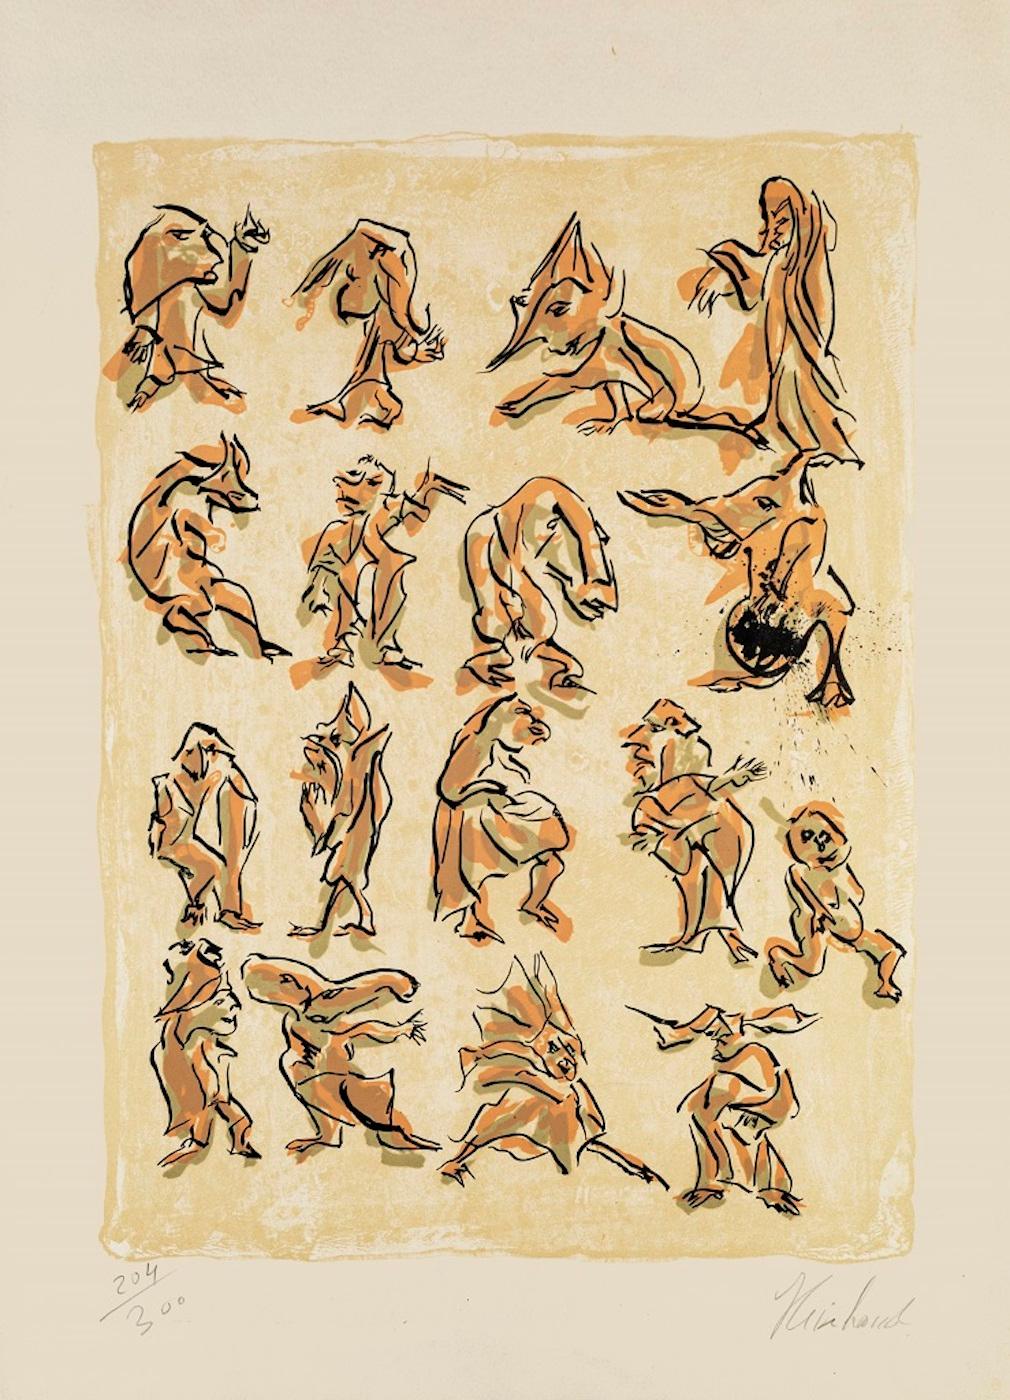 Reinhoud d'Haese Abstract Print - 17 Contre - Lithograph - 1970